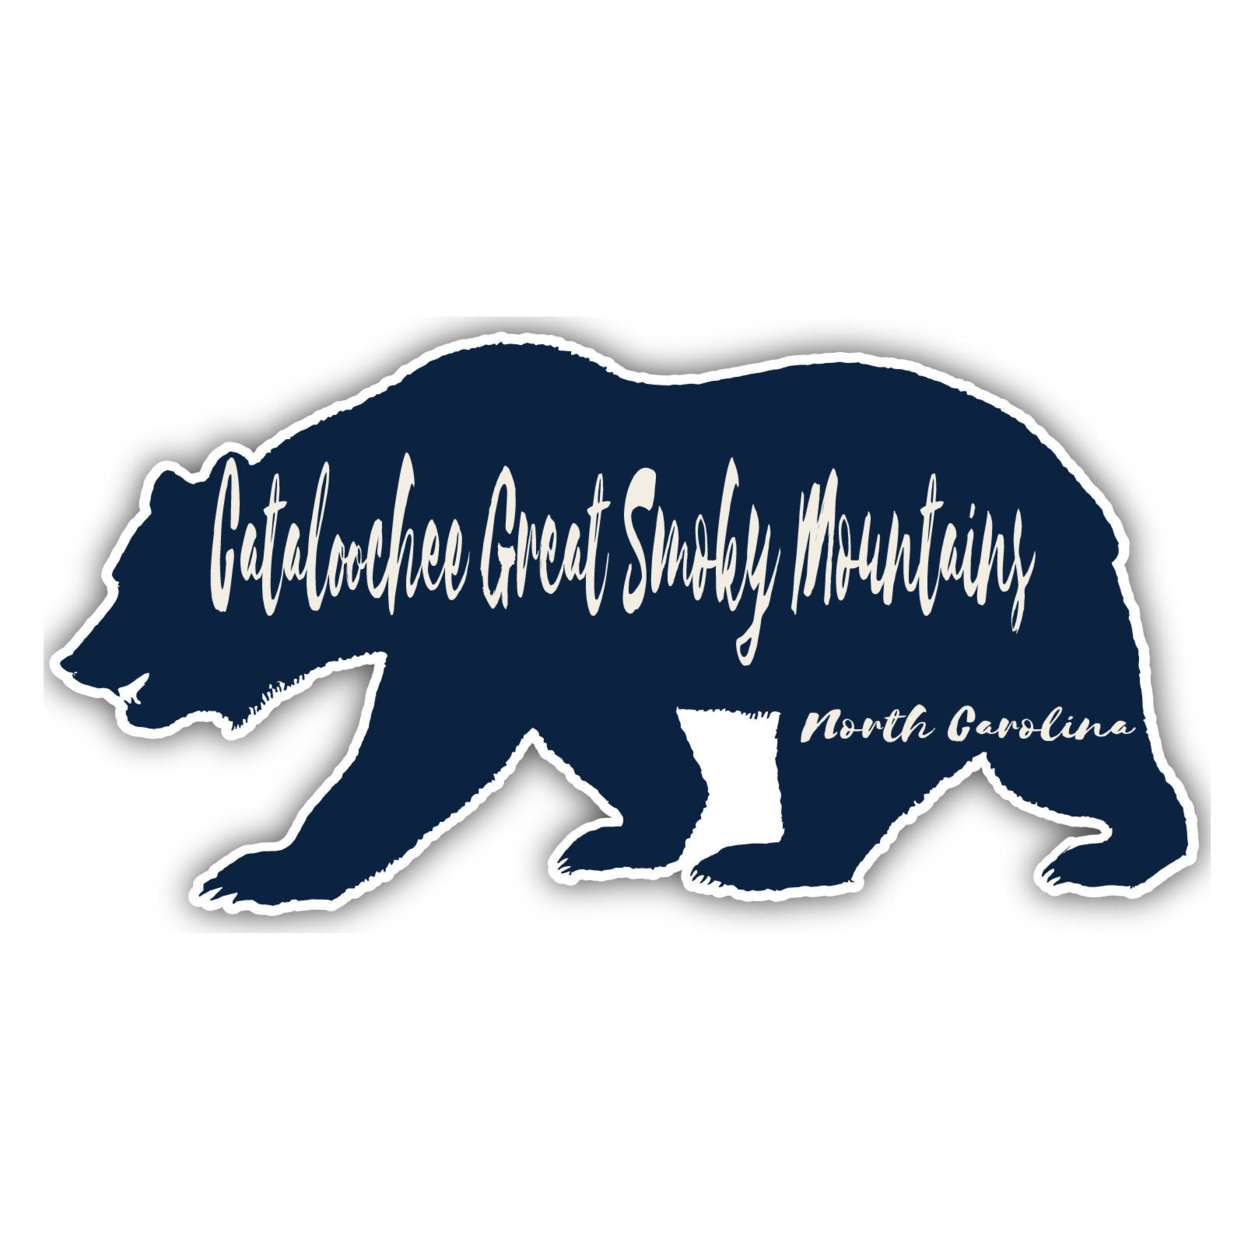 Cataloochee Great Smoky Mountains North Carolina Souvenir Decorative Stickers (Choose Theme And Size) - Single Unit, 2-Inch, Bear